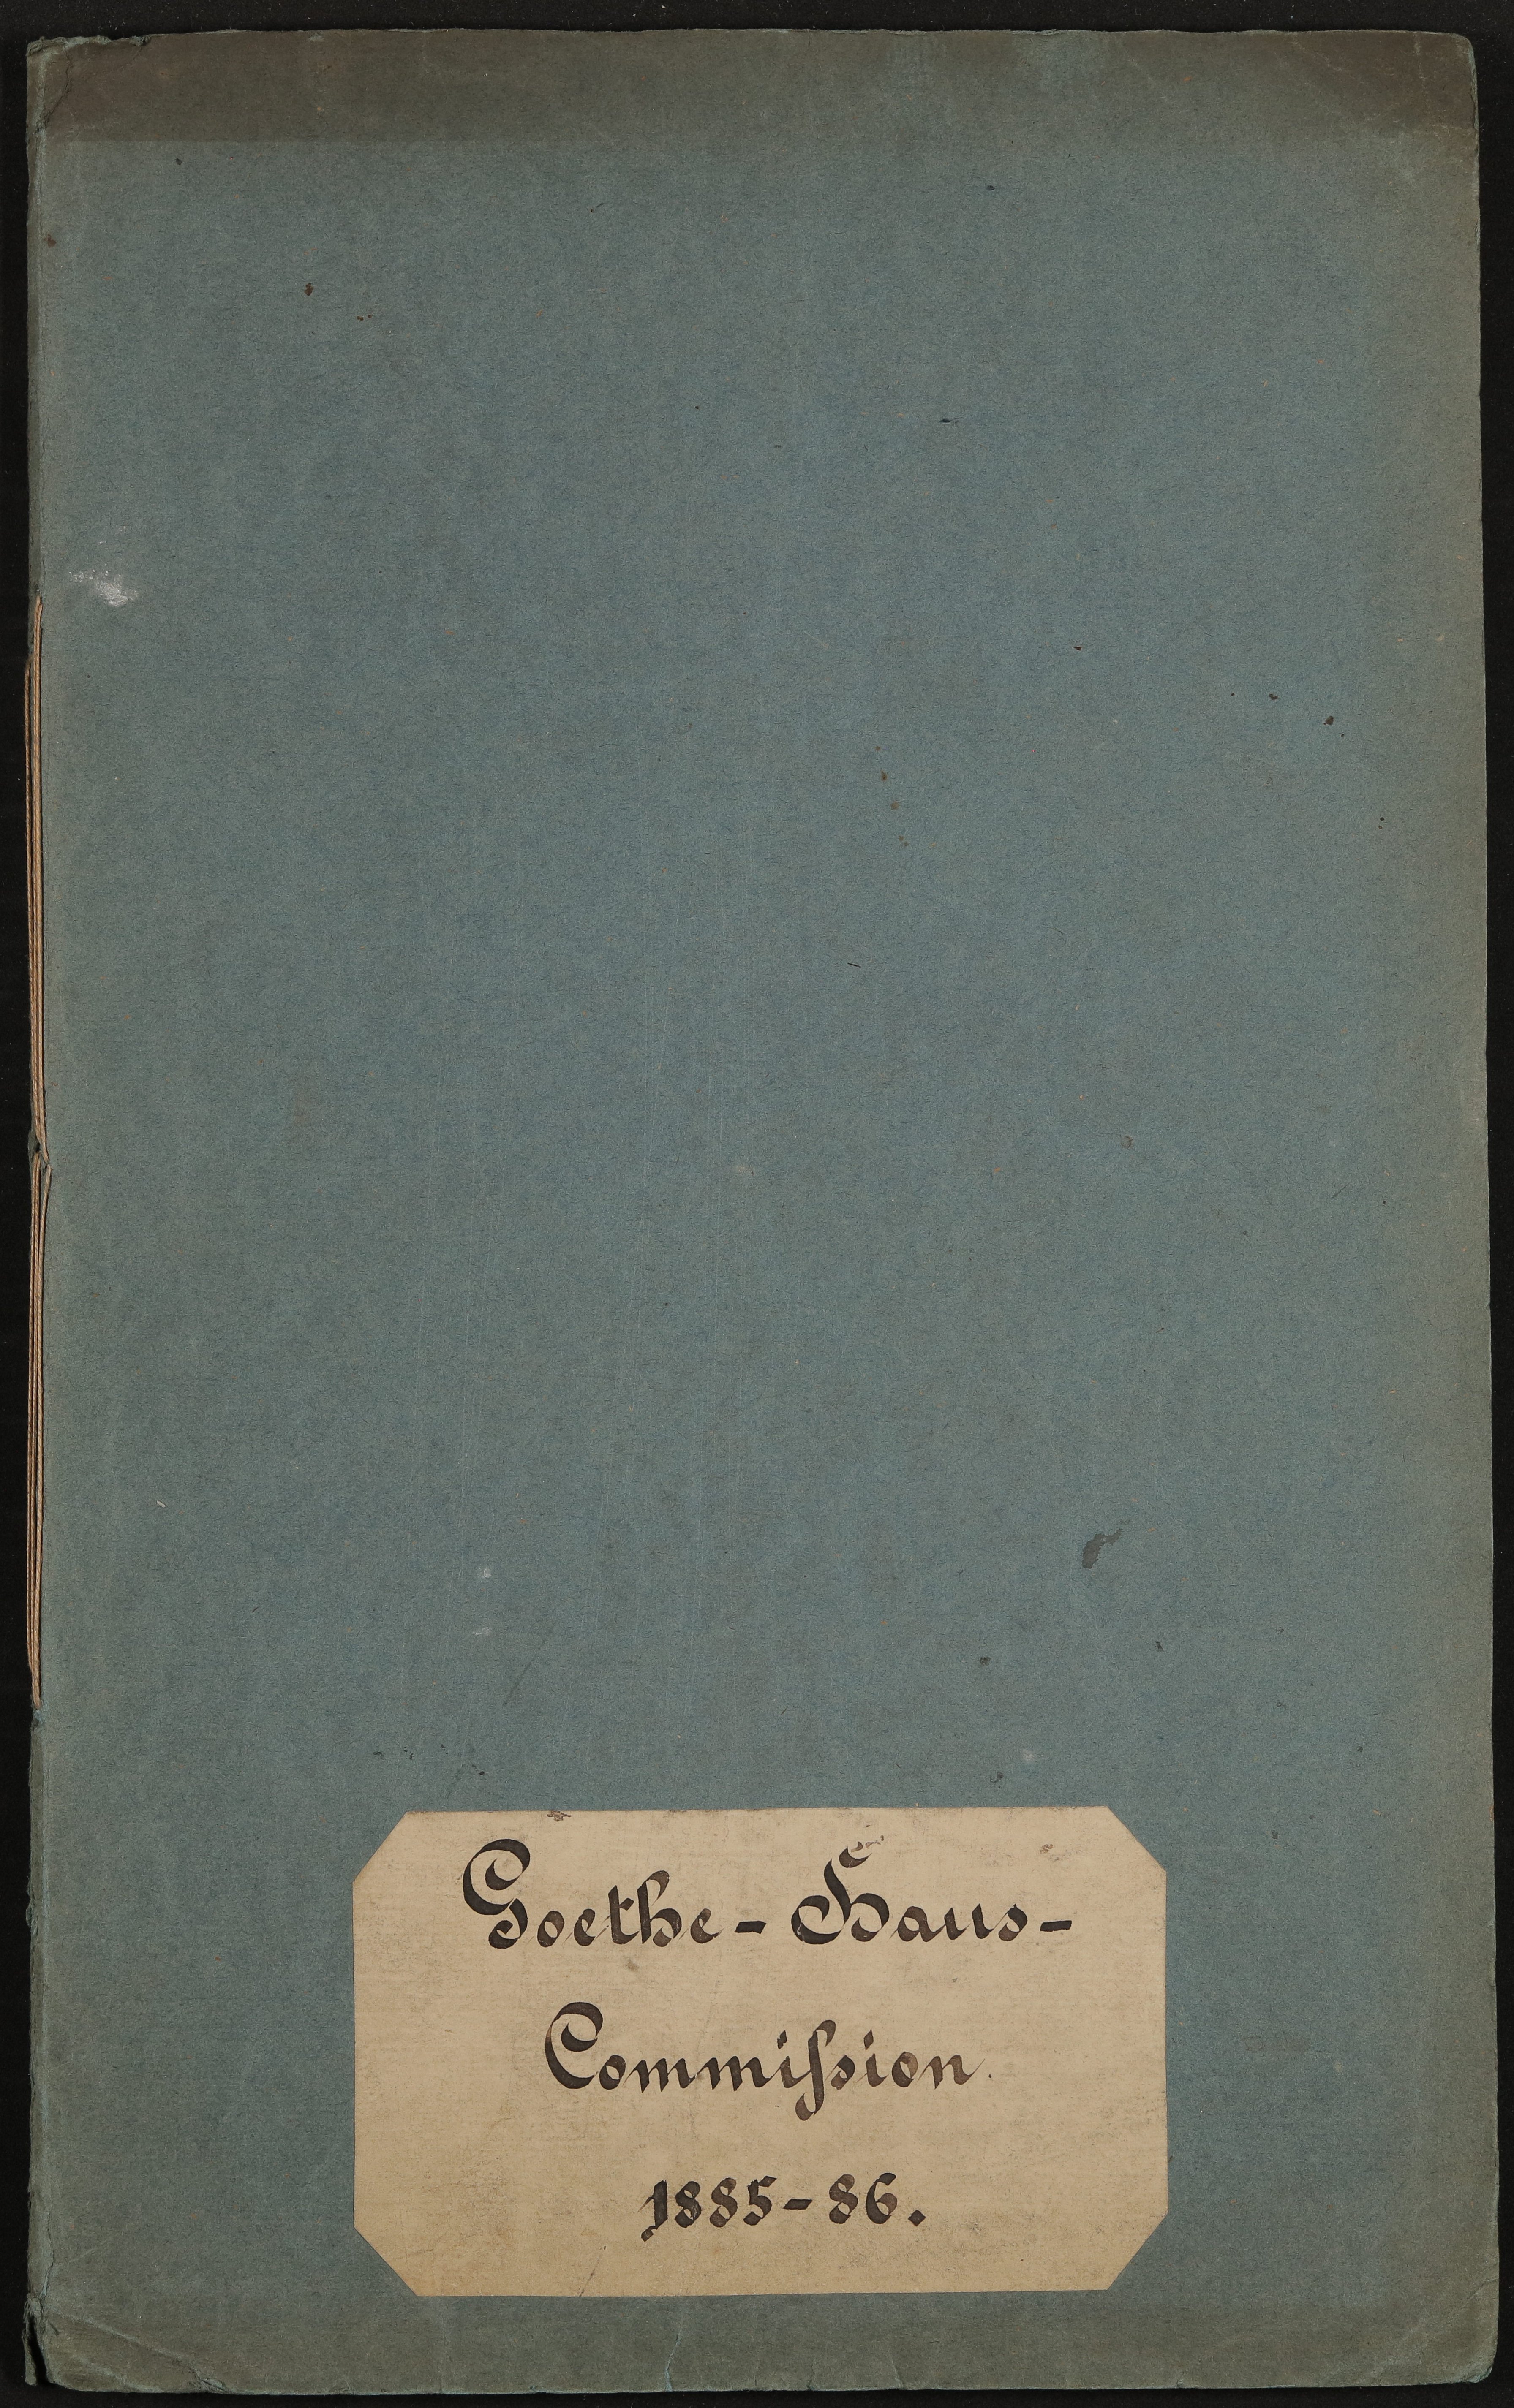 Goethe-Haus-Commission - Protokolle 1885-1887 (Freies Deutsches Hochstift / Frankfurter Goethe-Museum Public Domain Mark)